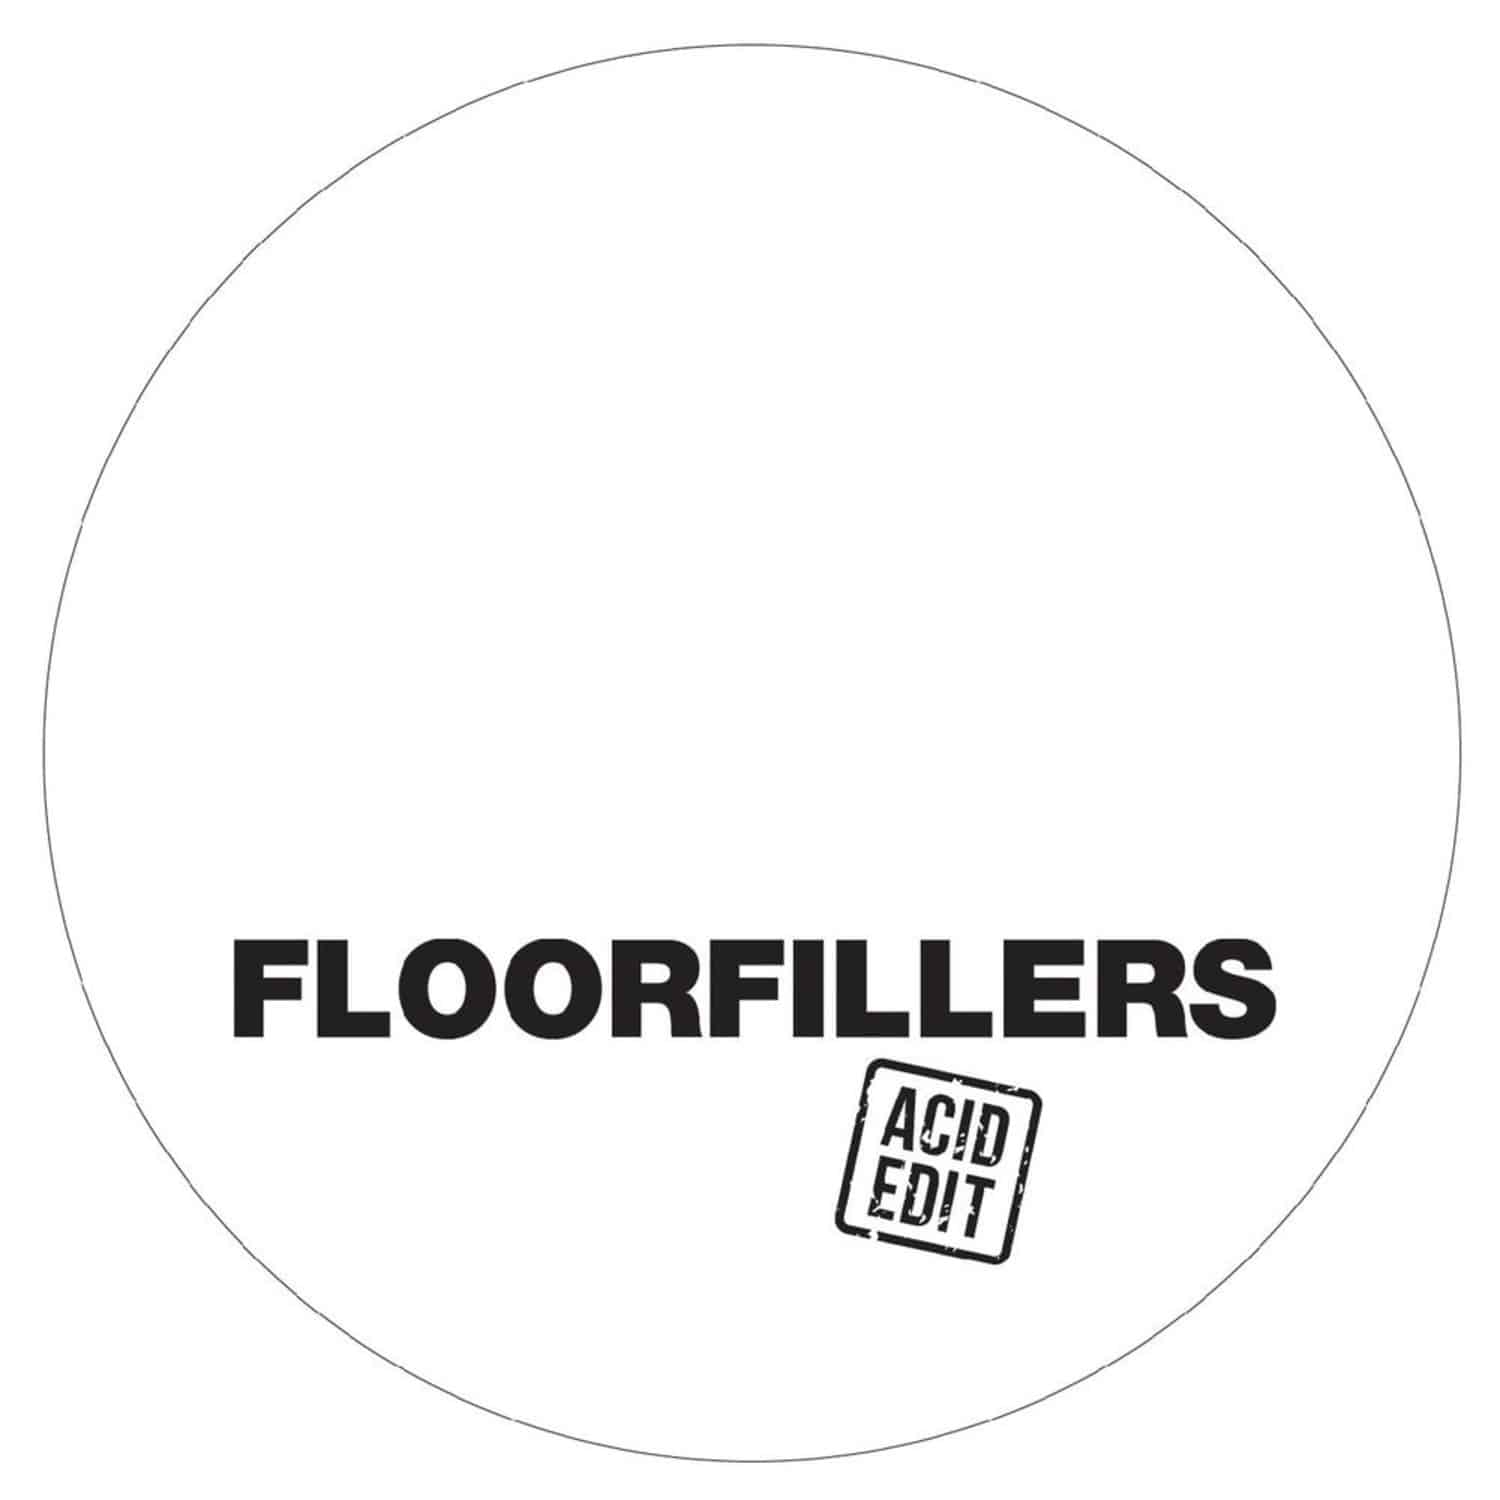 Floorfillers - ACID EDIT 1